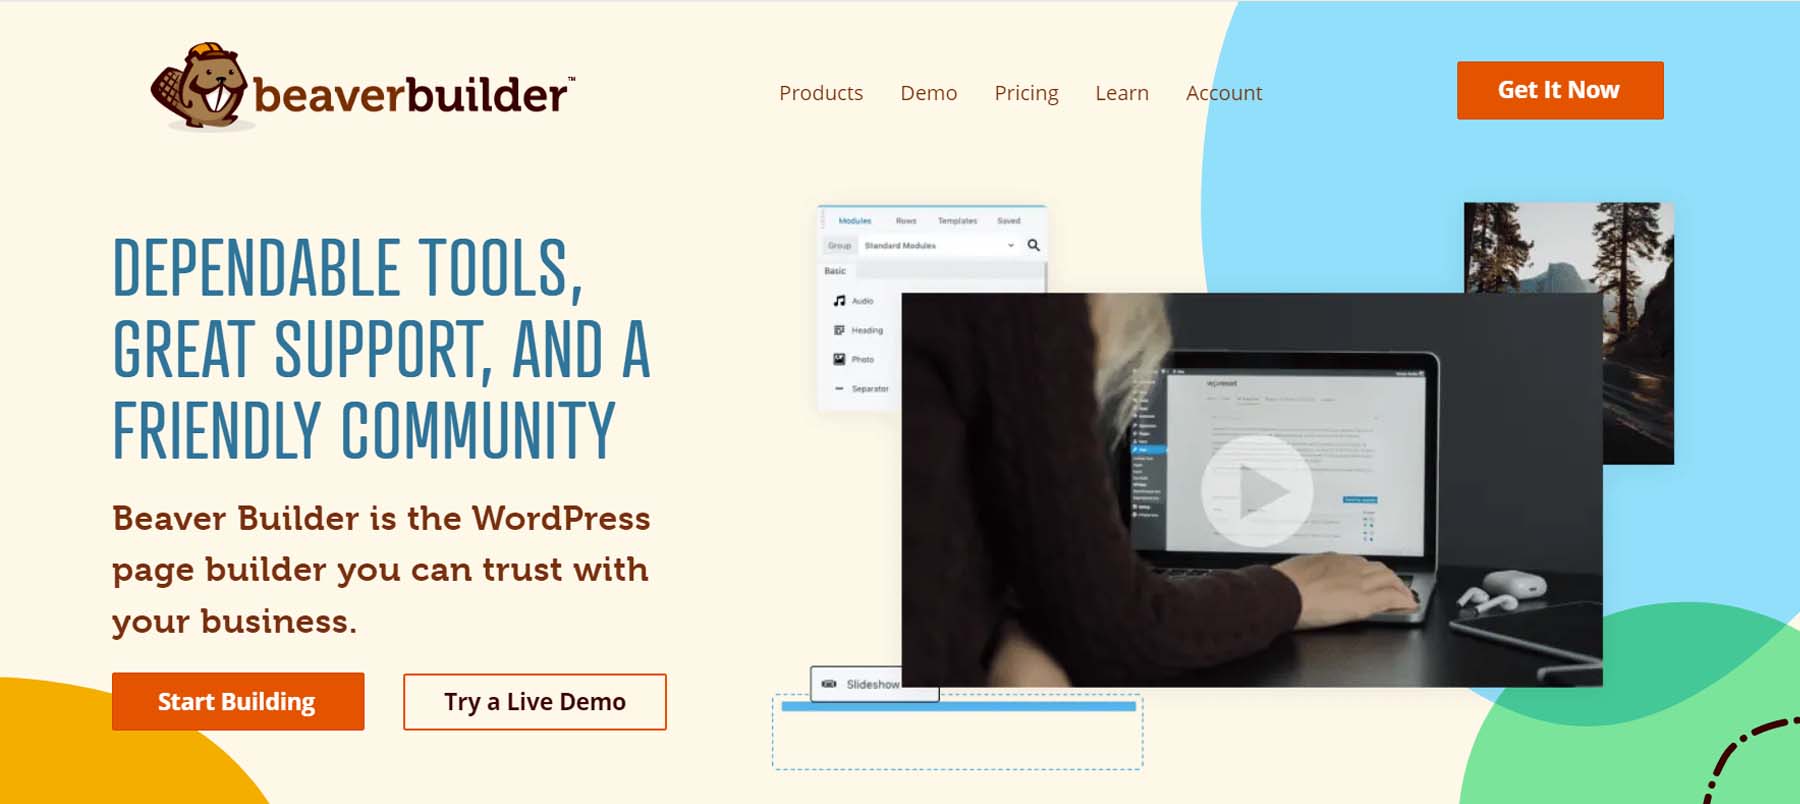 Beaver Builder เป็นปลั๊กอิน WordPress ที่มีอยู่ใน repo ปลั๊กอิน WP